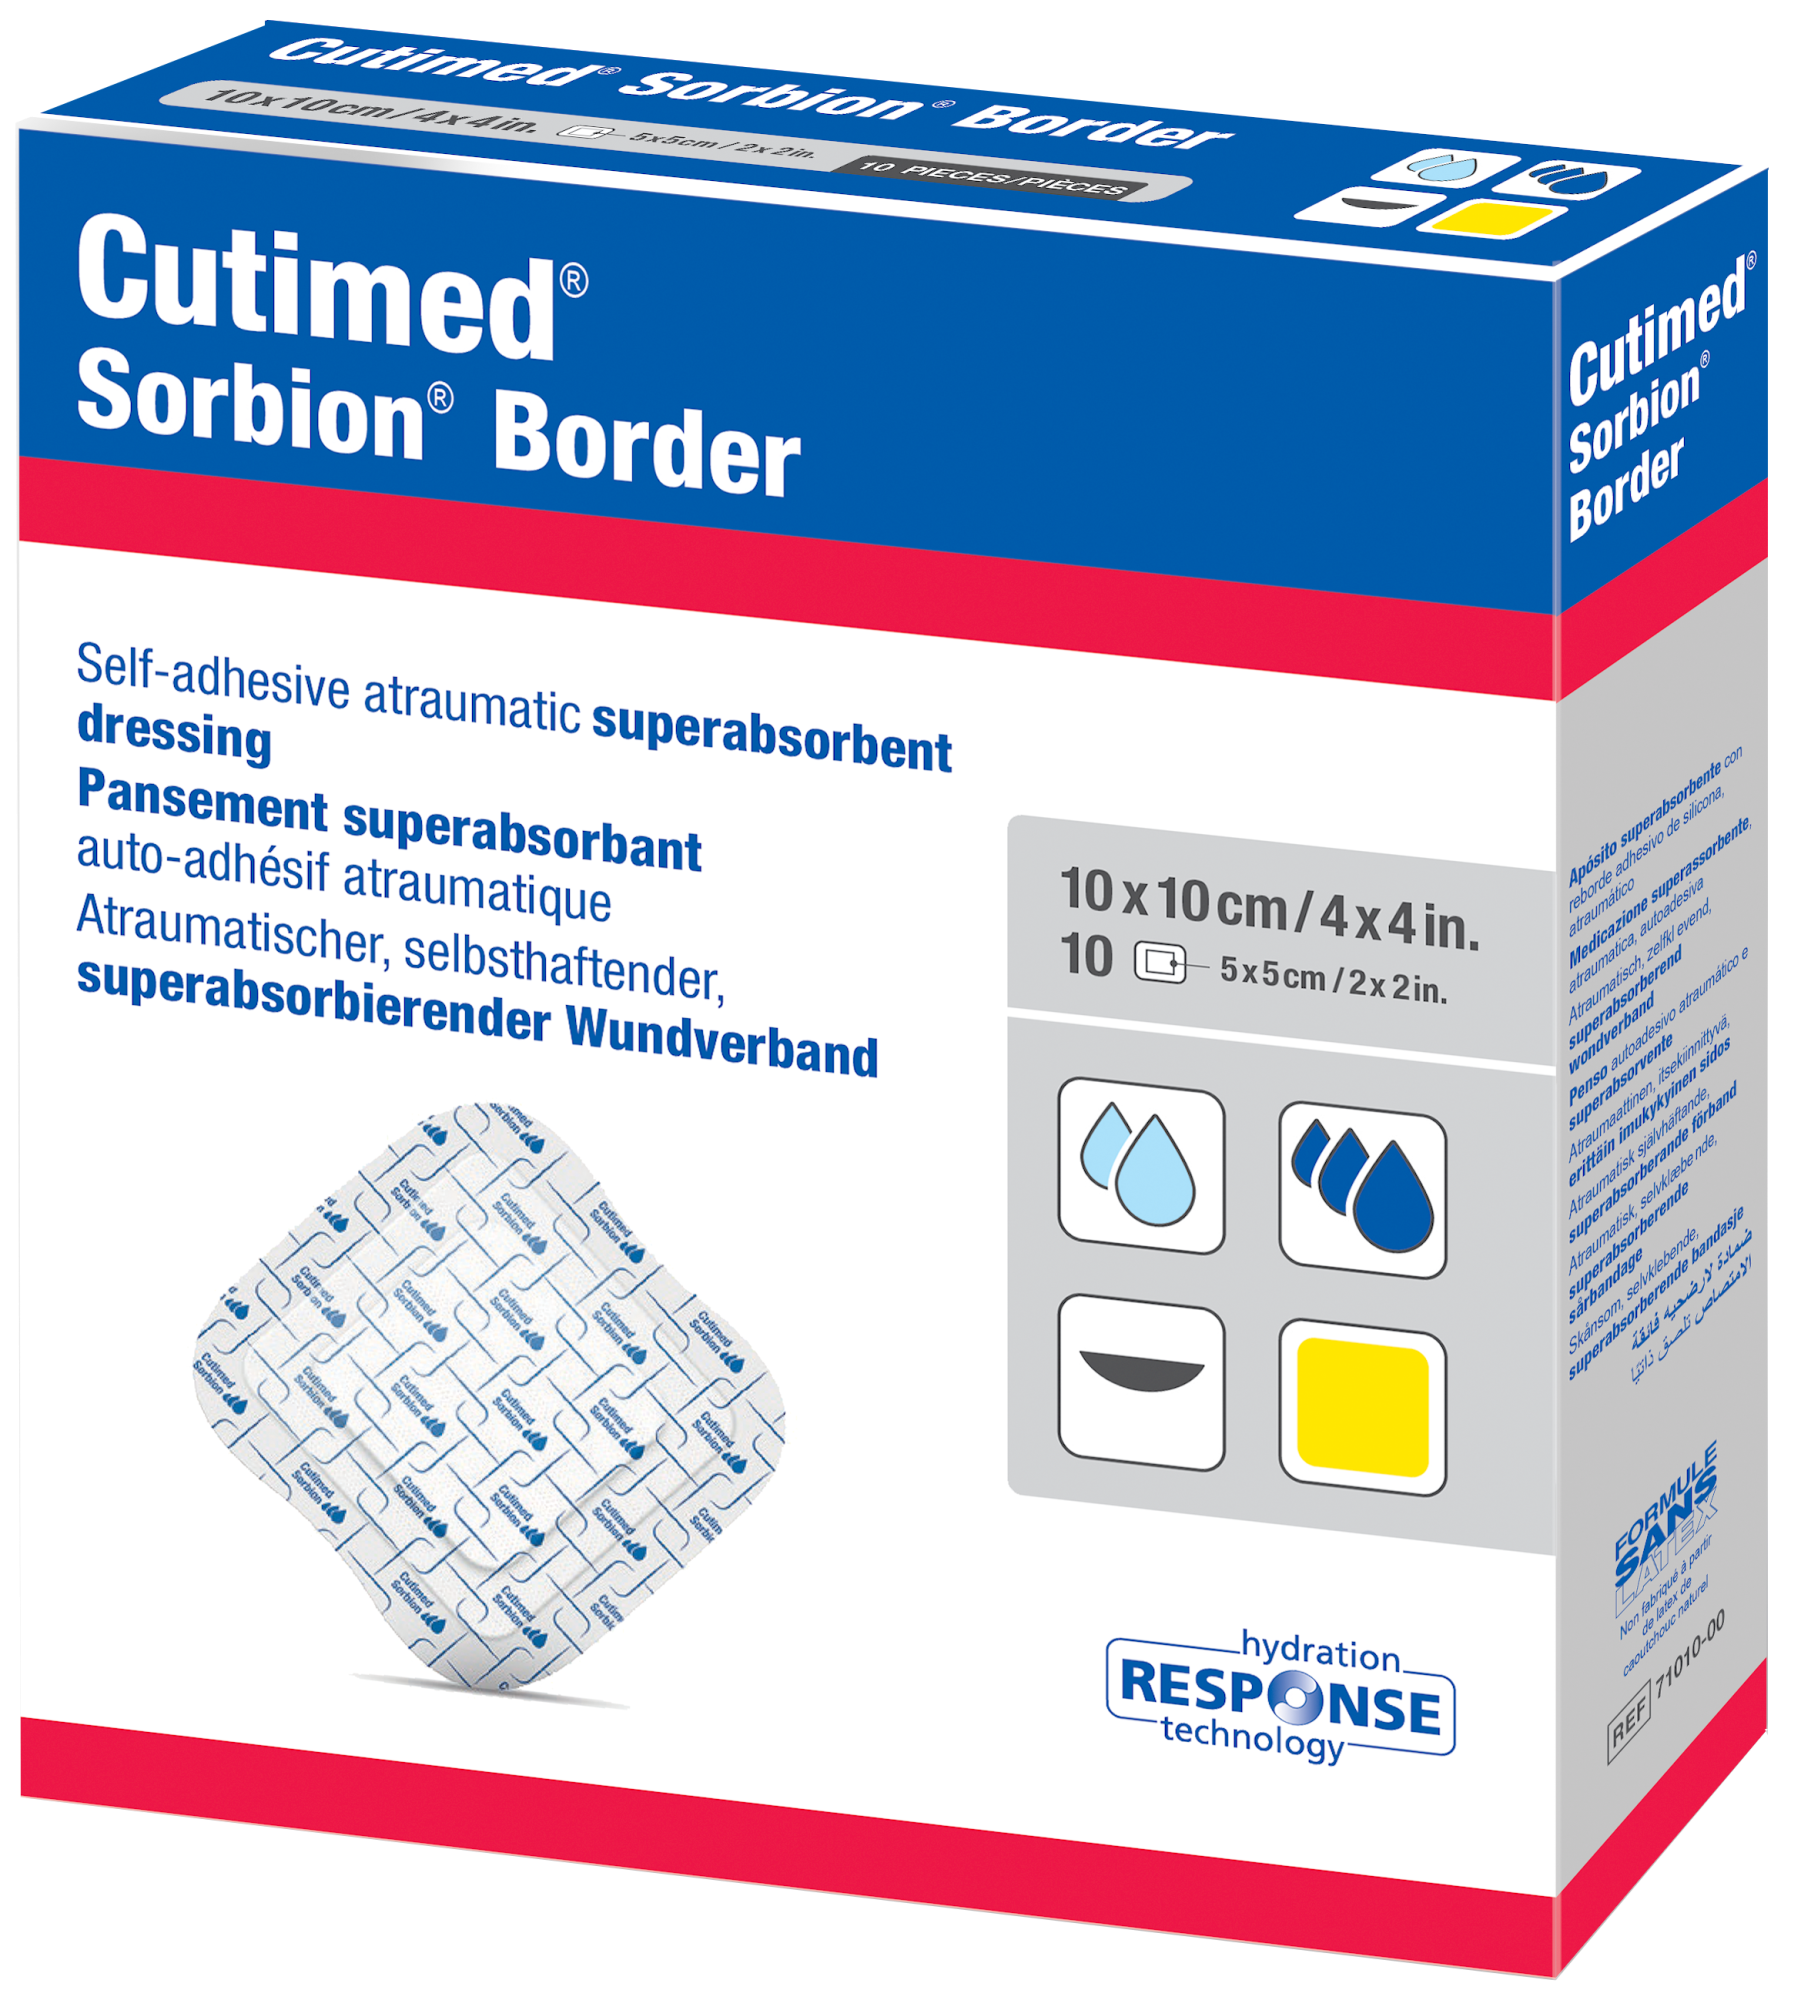 Cutimed® Sorbion® Border